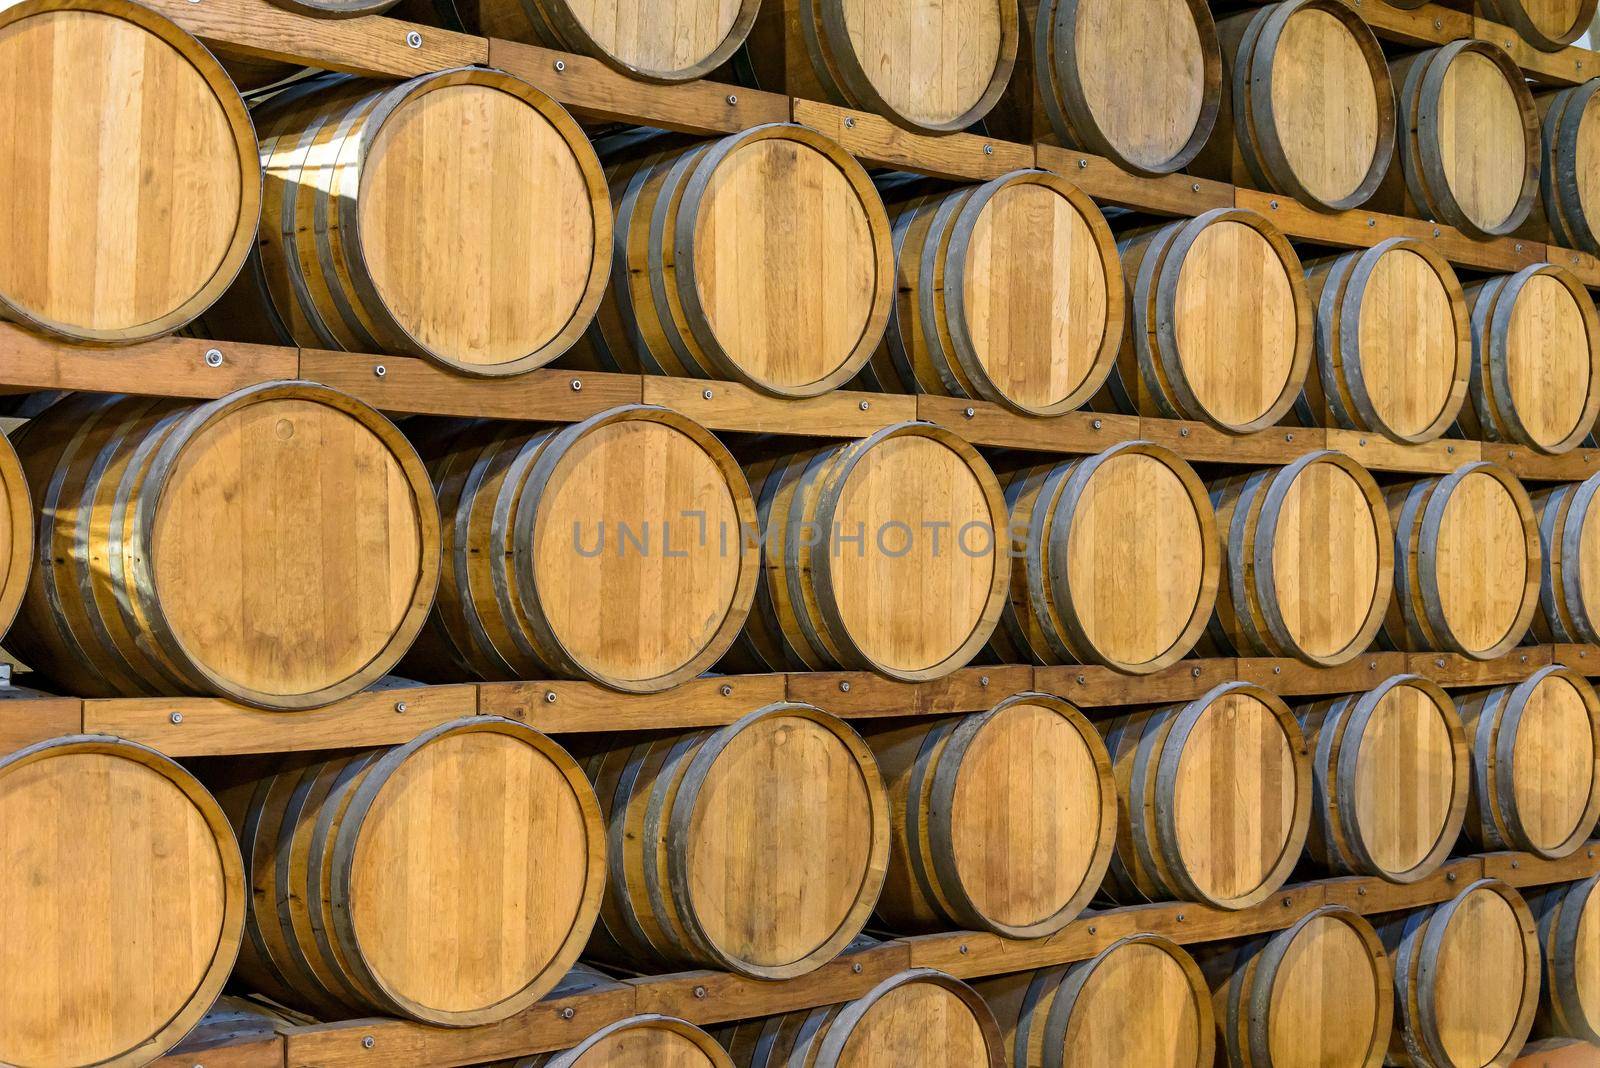 Lots of wooden barrels in the wine cellar